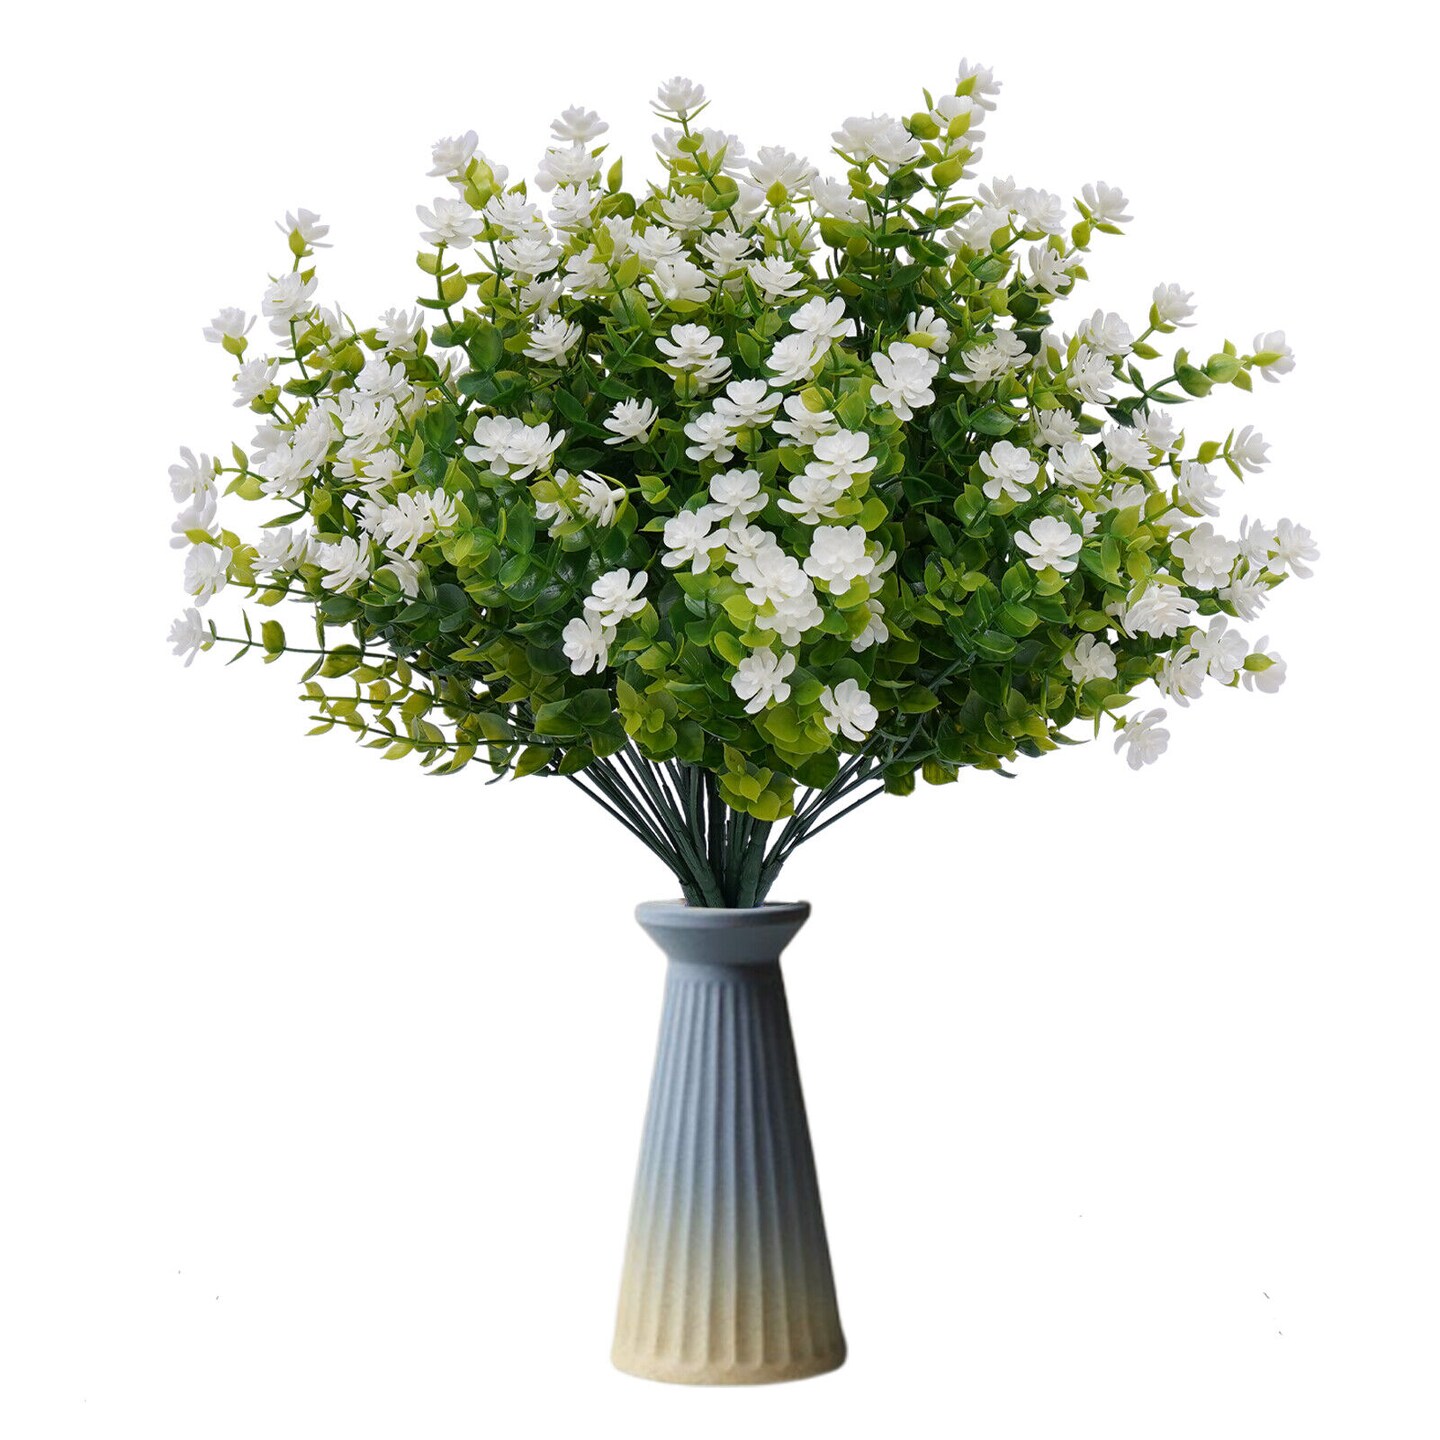 Kitcheniva 8 Bundles White Artificial Flowers Table Decorations